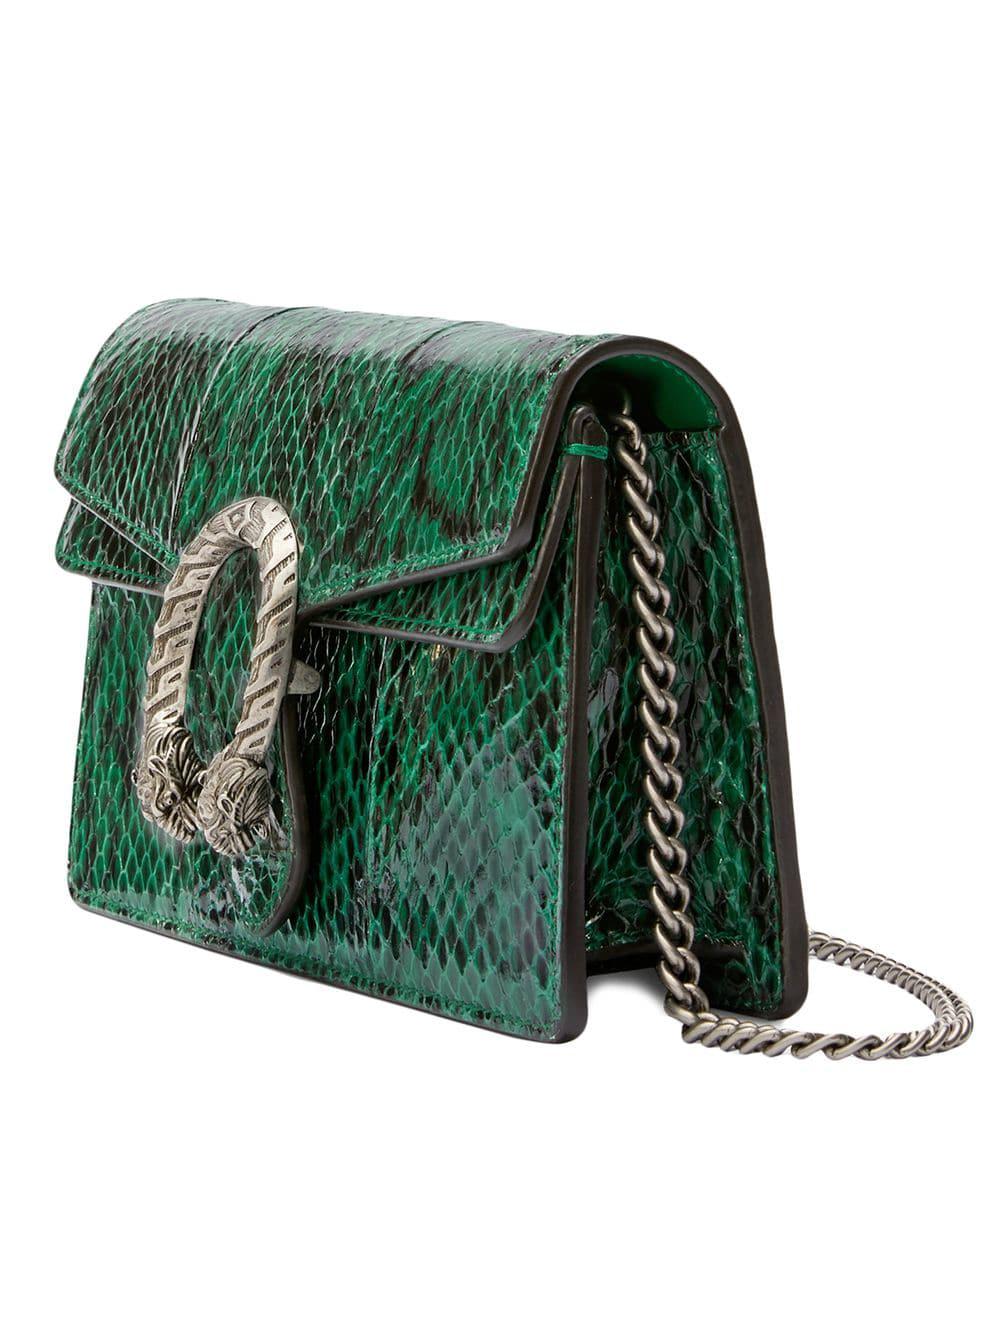 Gucci Dionysus Super Mini Snakeskin Bag in Green - Lyst